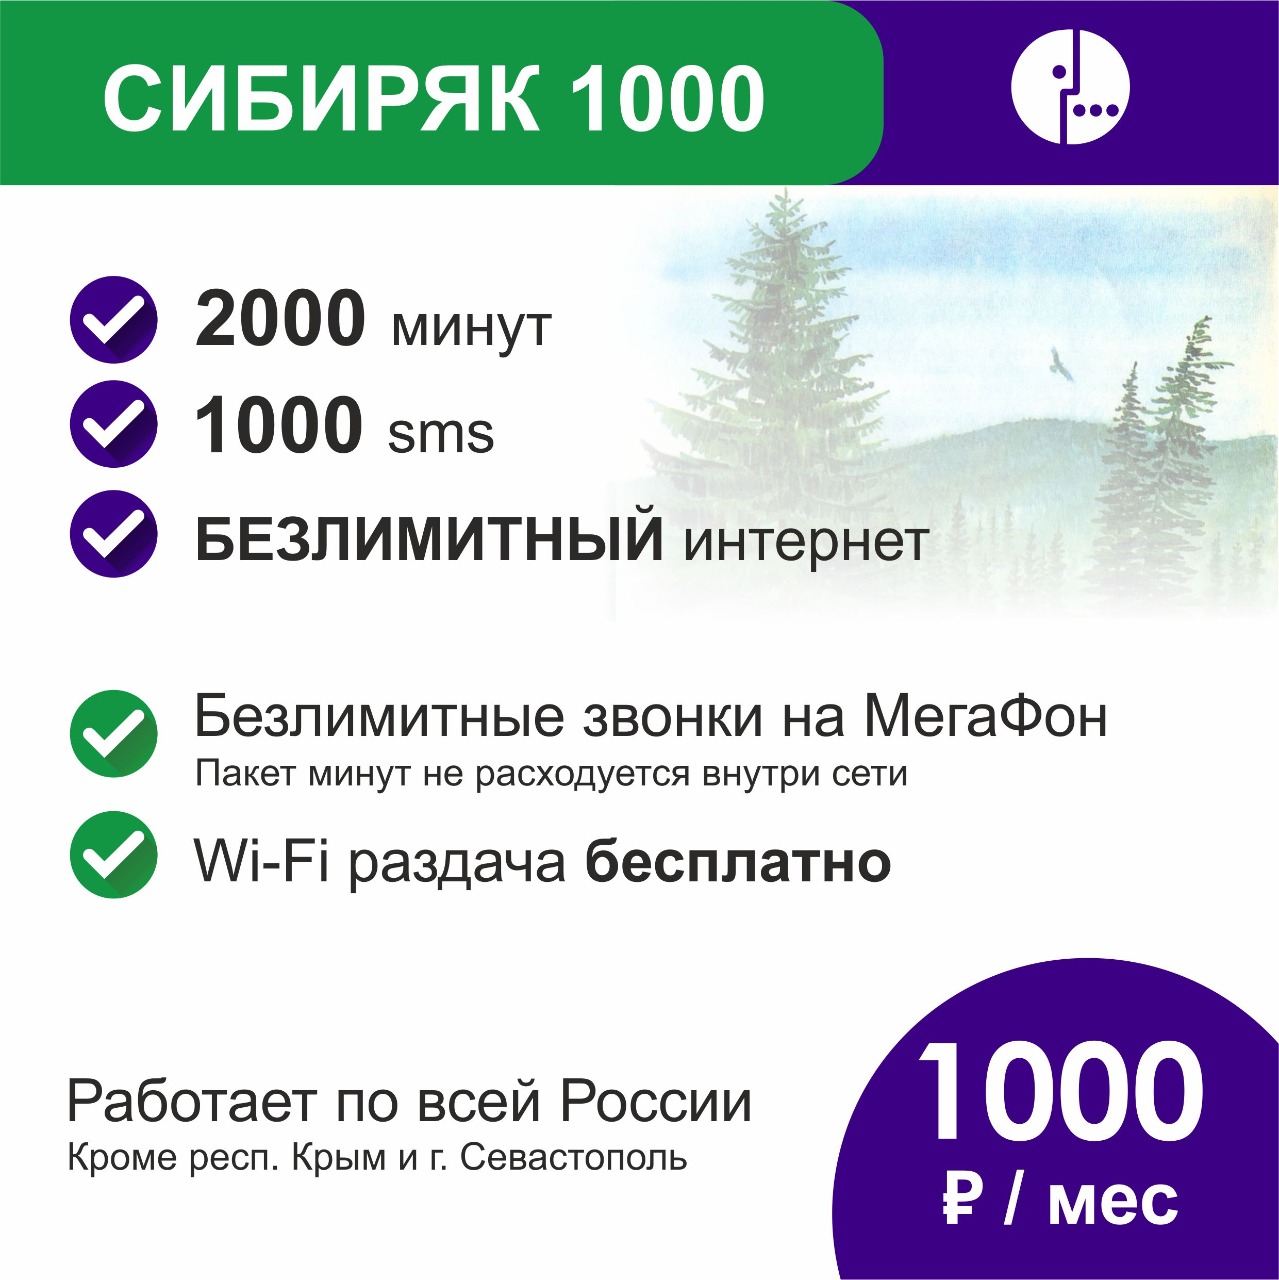 Саяногорск Инфо - whatsapp-image-2020-08-21-at-114742-1.jpeg, Скачано: 467